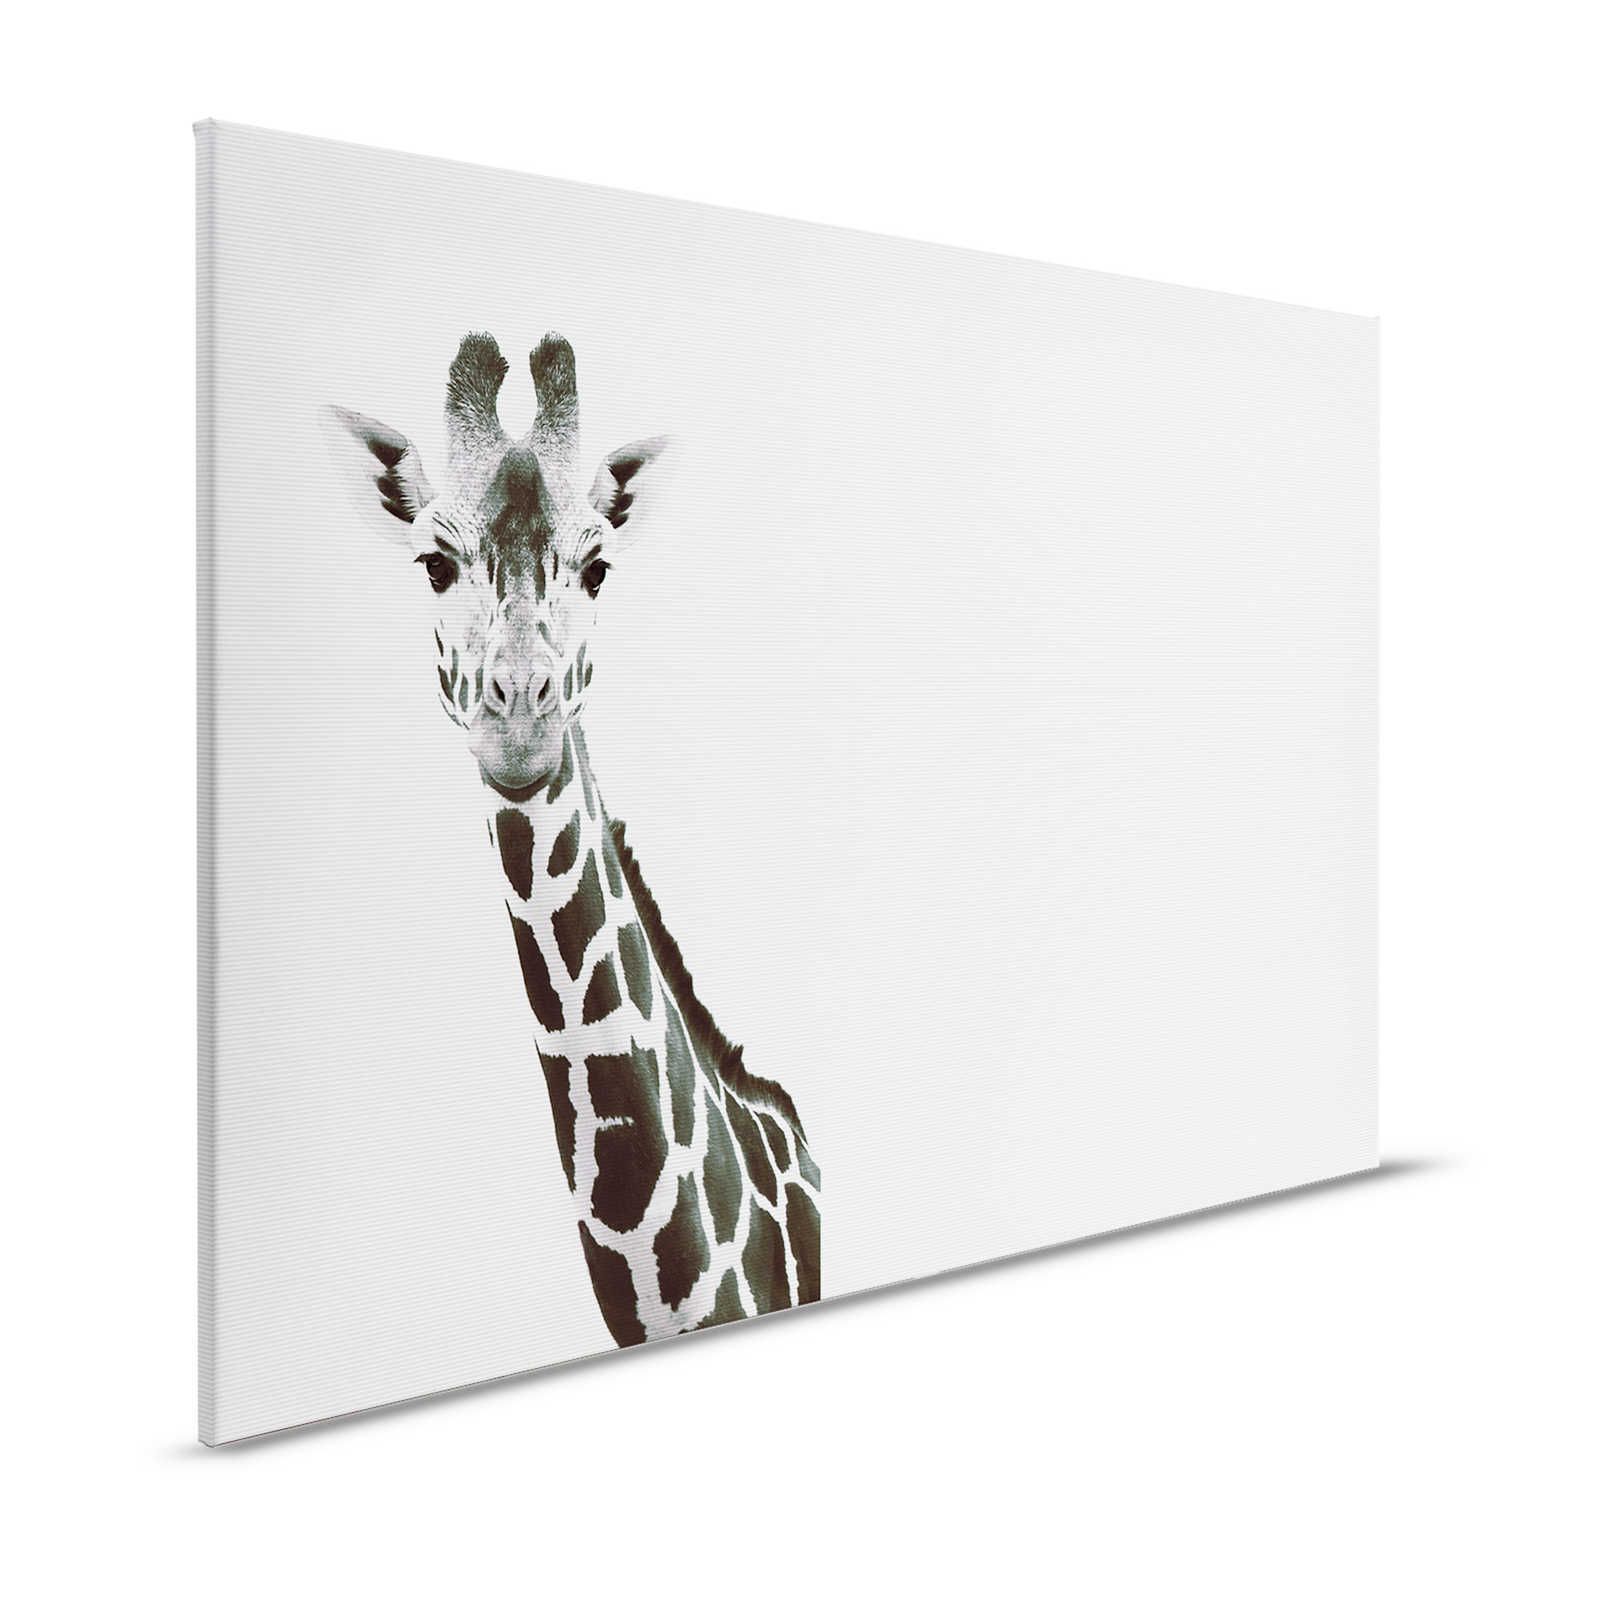 Giraffes Canvas Painting XXL Black & White Design - 1.20 m x 0.80 m
